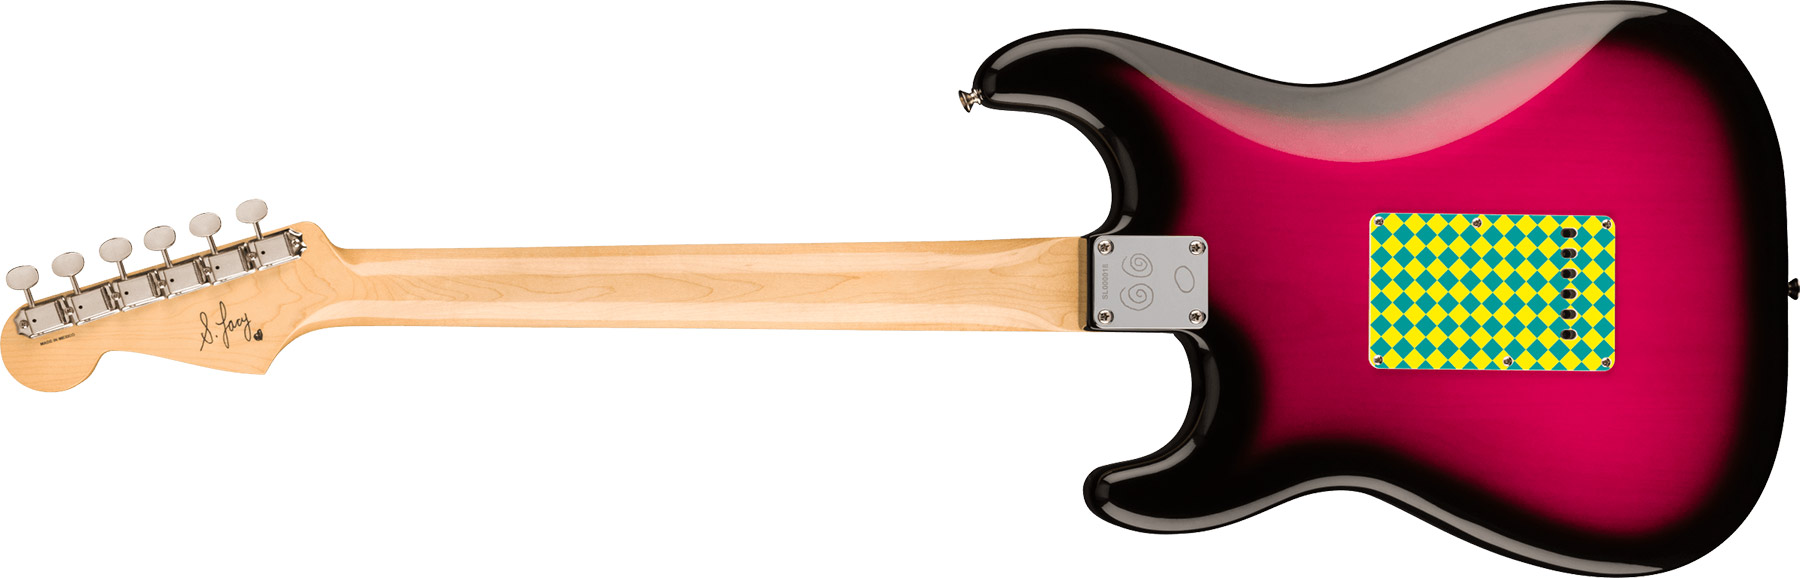 Fender Steve Lacy Strat People Pleaser Mex Signature 3s Trem Mn - Chaos Burst - Str shape electric guitar - Variation 1